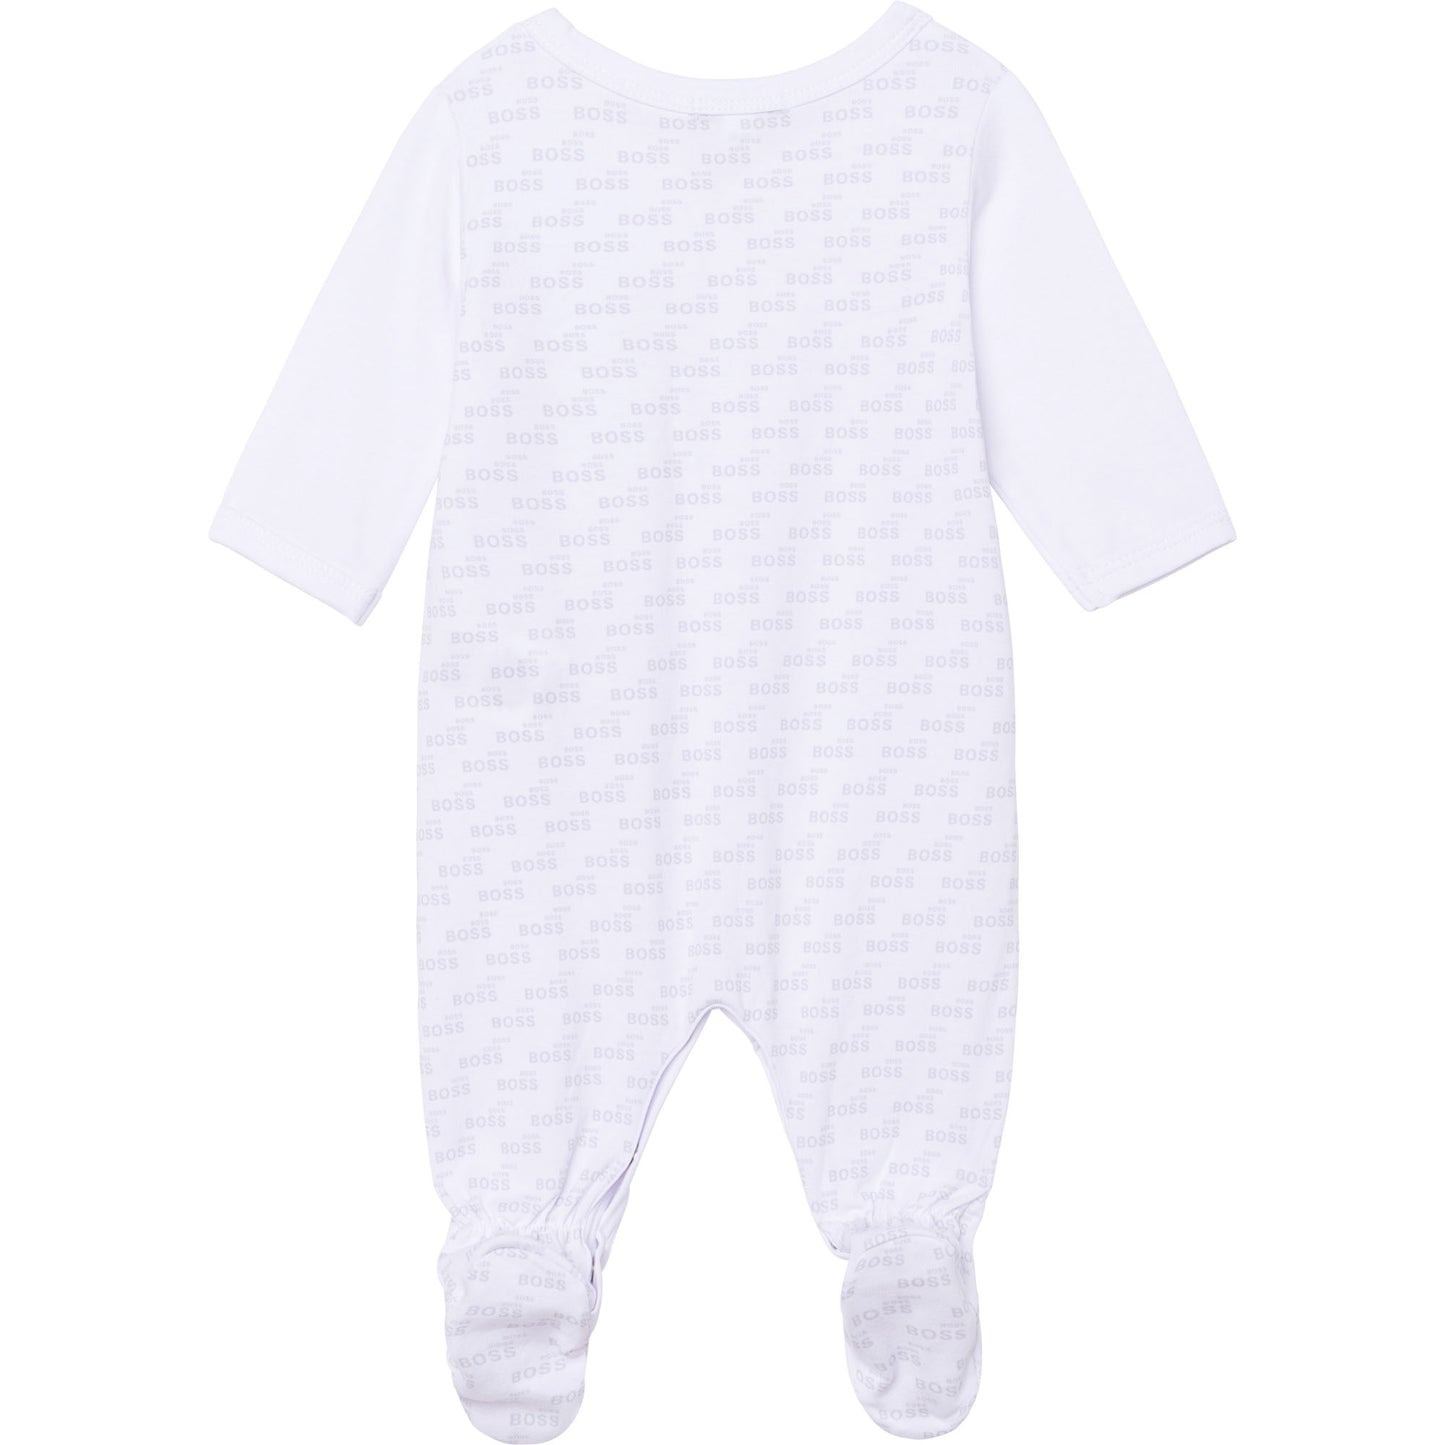 Hugo Boss Baby Pajama and Hat Set J98329